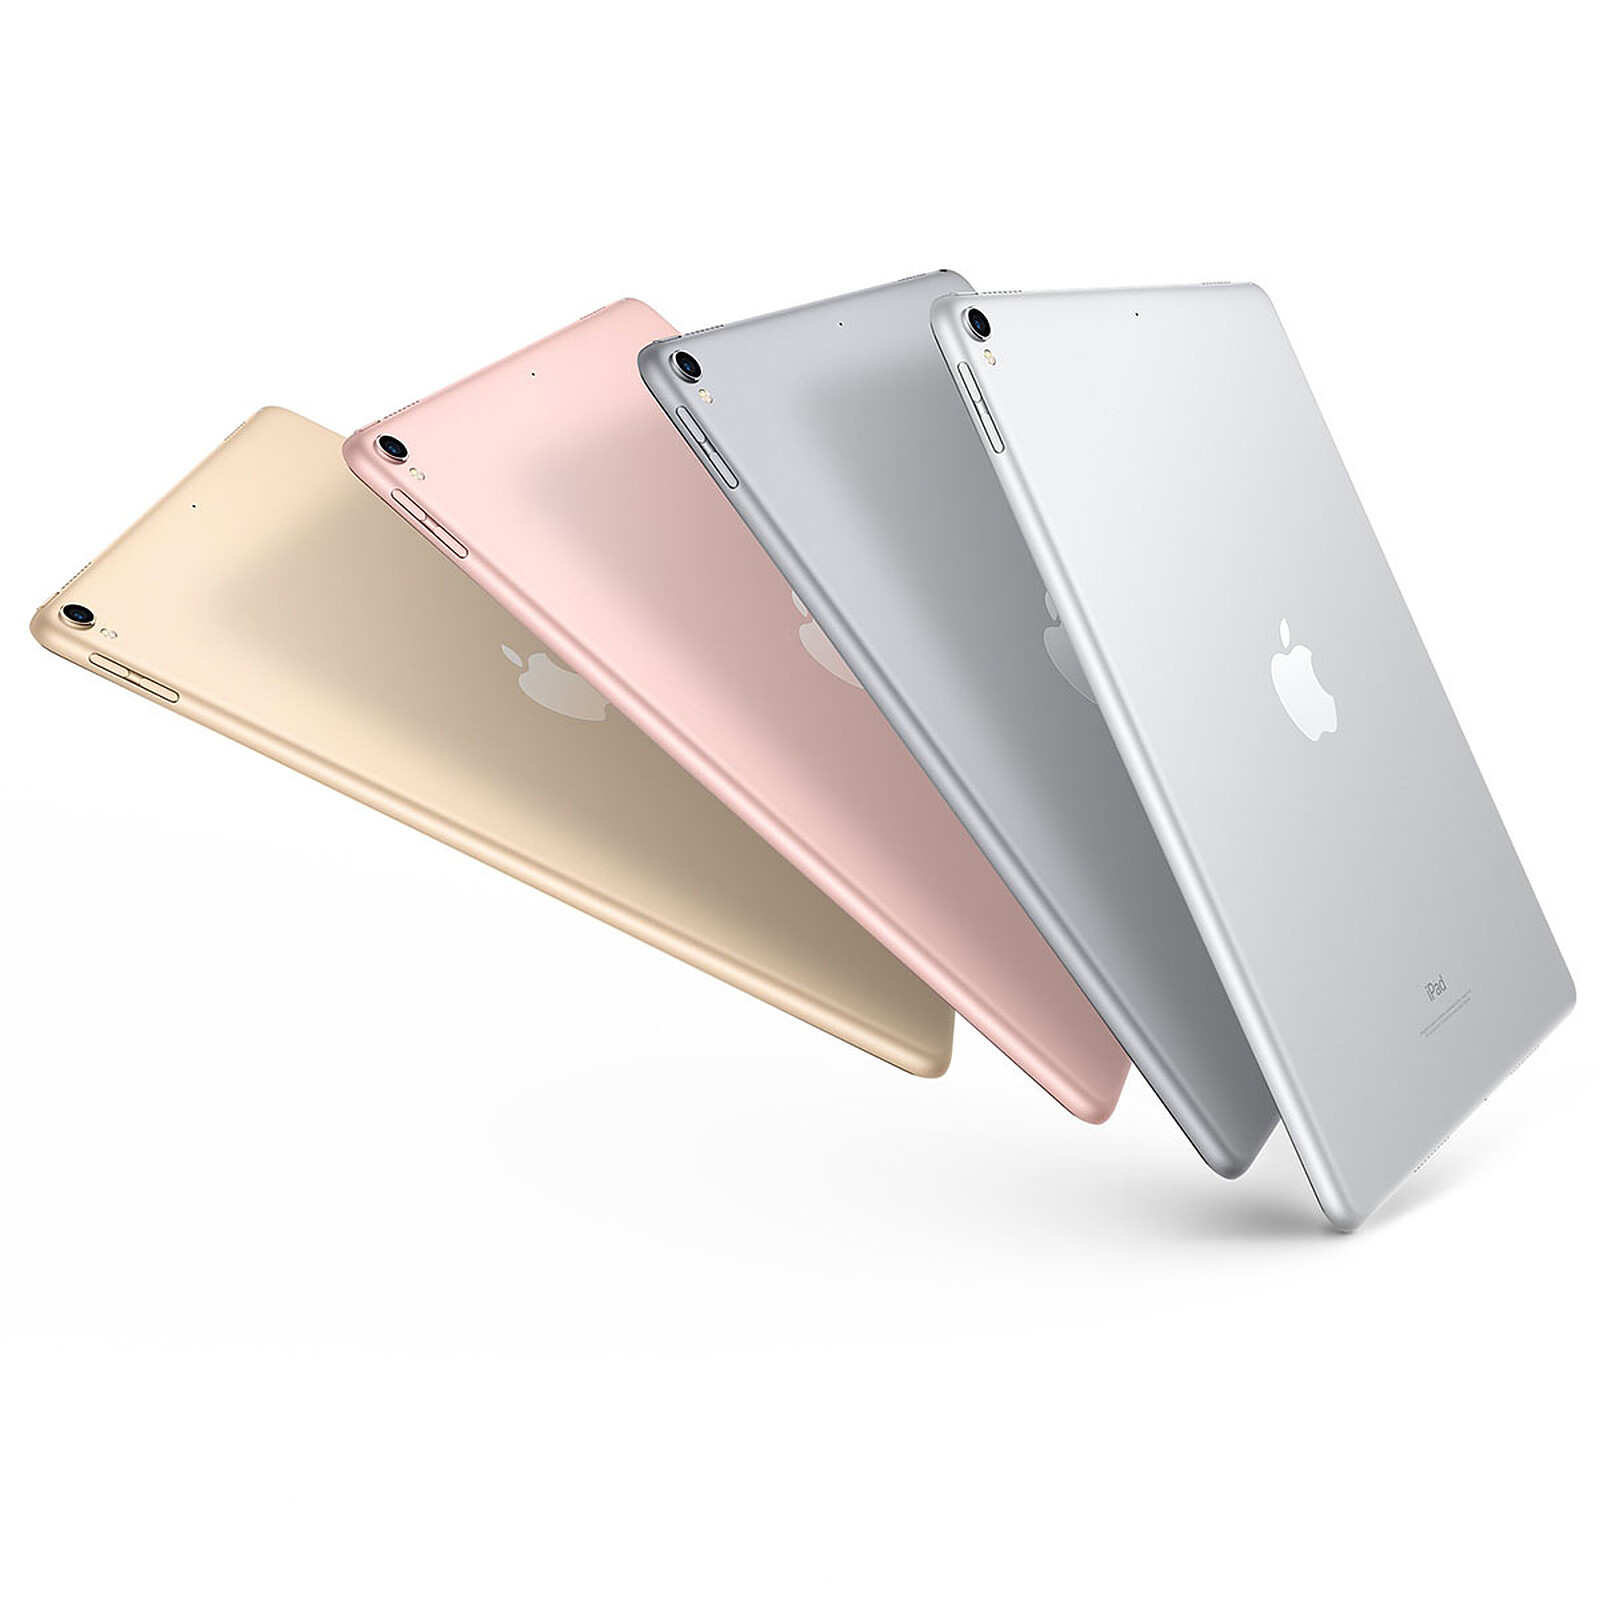 Apple iPad Pro 10.5 inch 64GB Wi-Fi Silver - Tablet computer Apple 